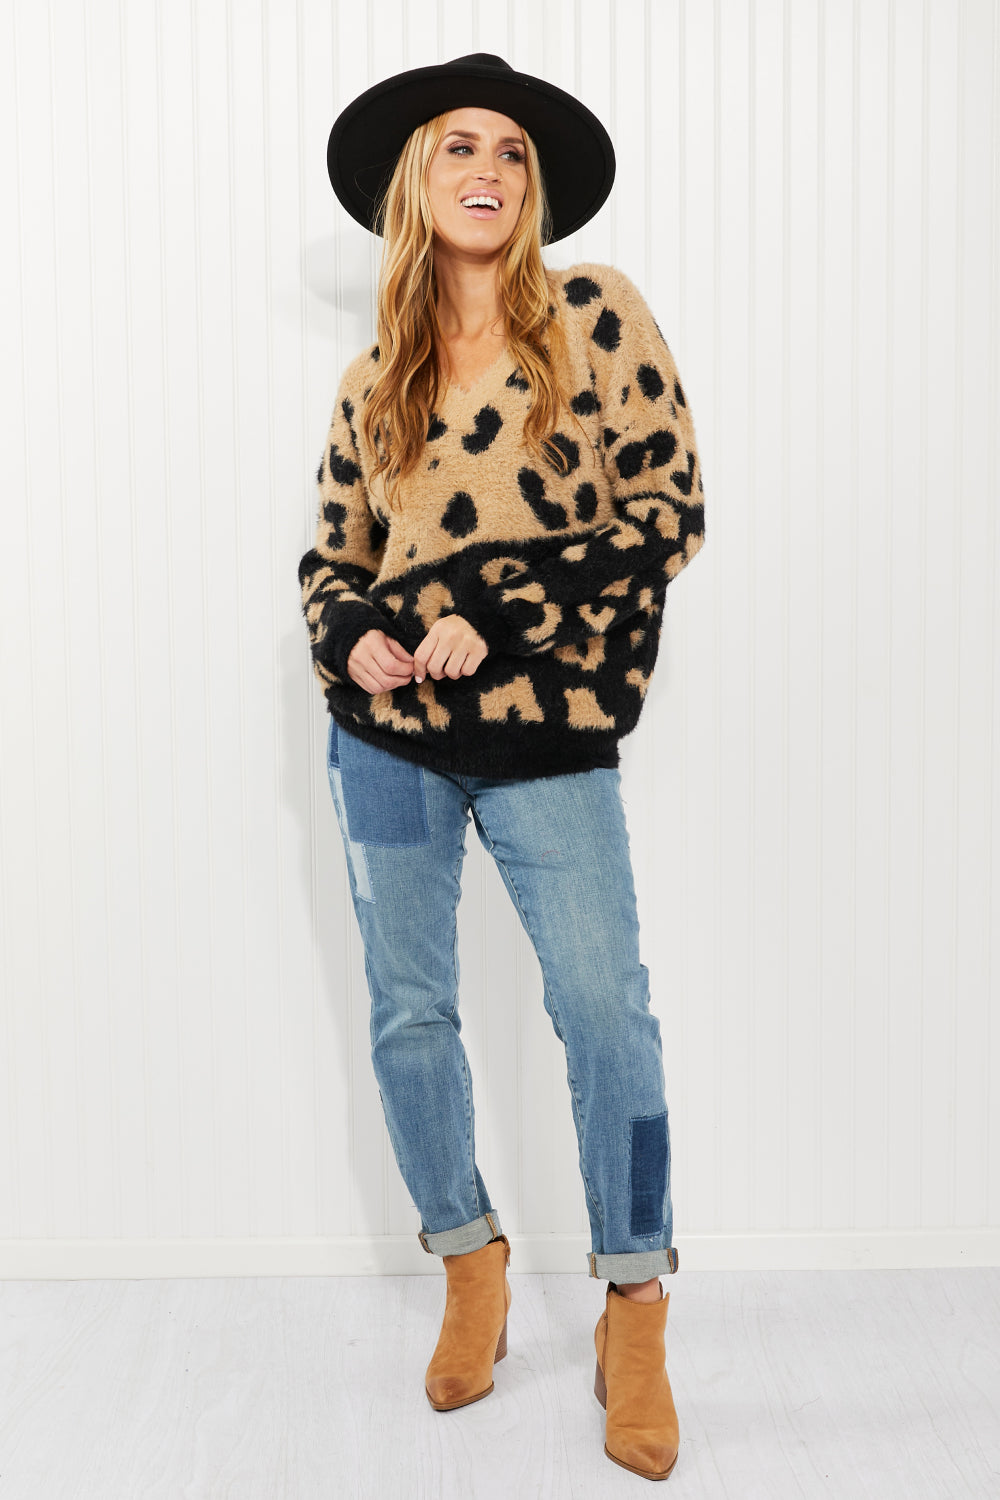 CY Fashion Full Size Leopard V-Neck Fuzzy Sweater